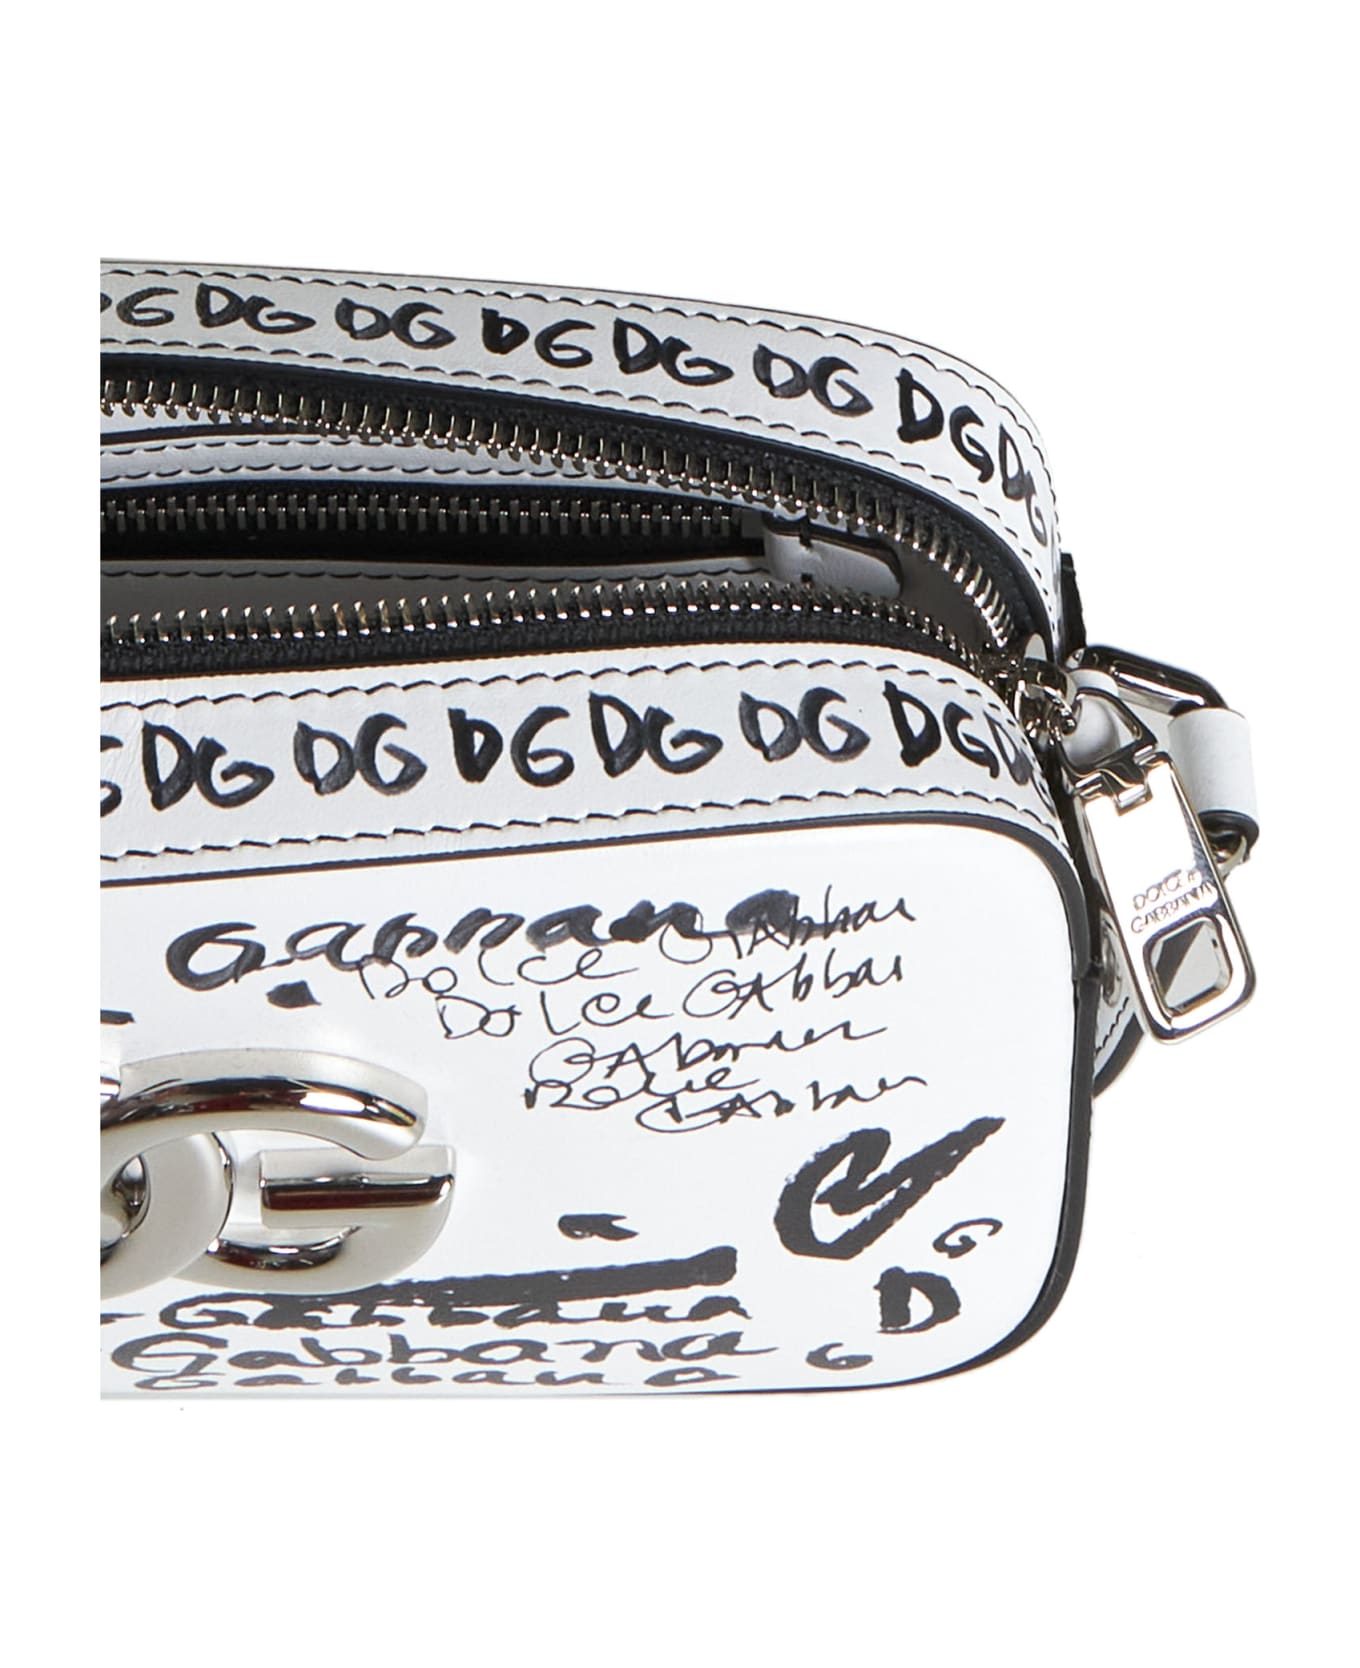 Dolce & Gabbana Shoulder Bag - Logo2 nero f bco ott